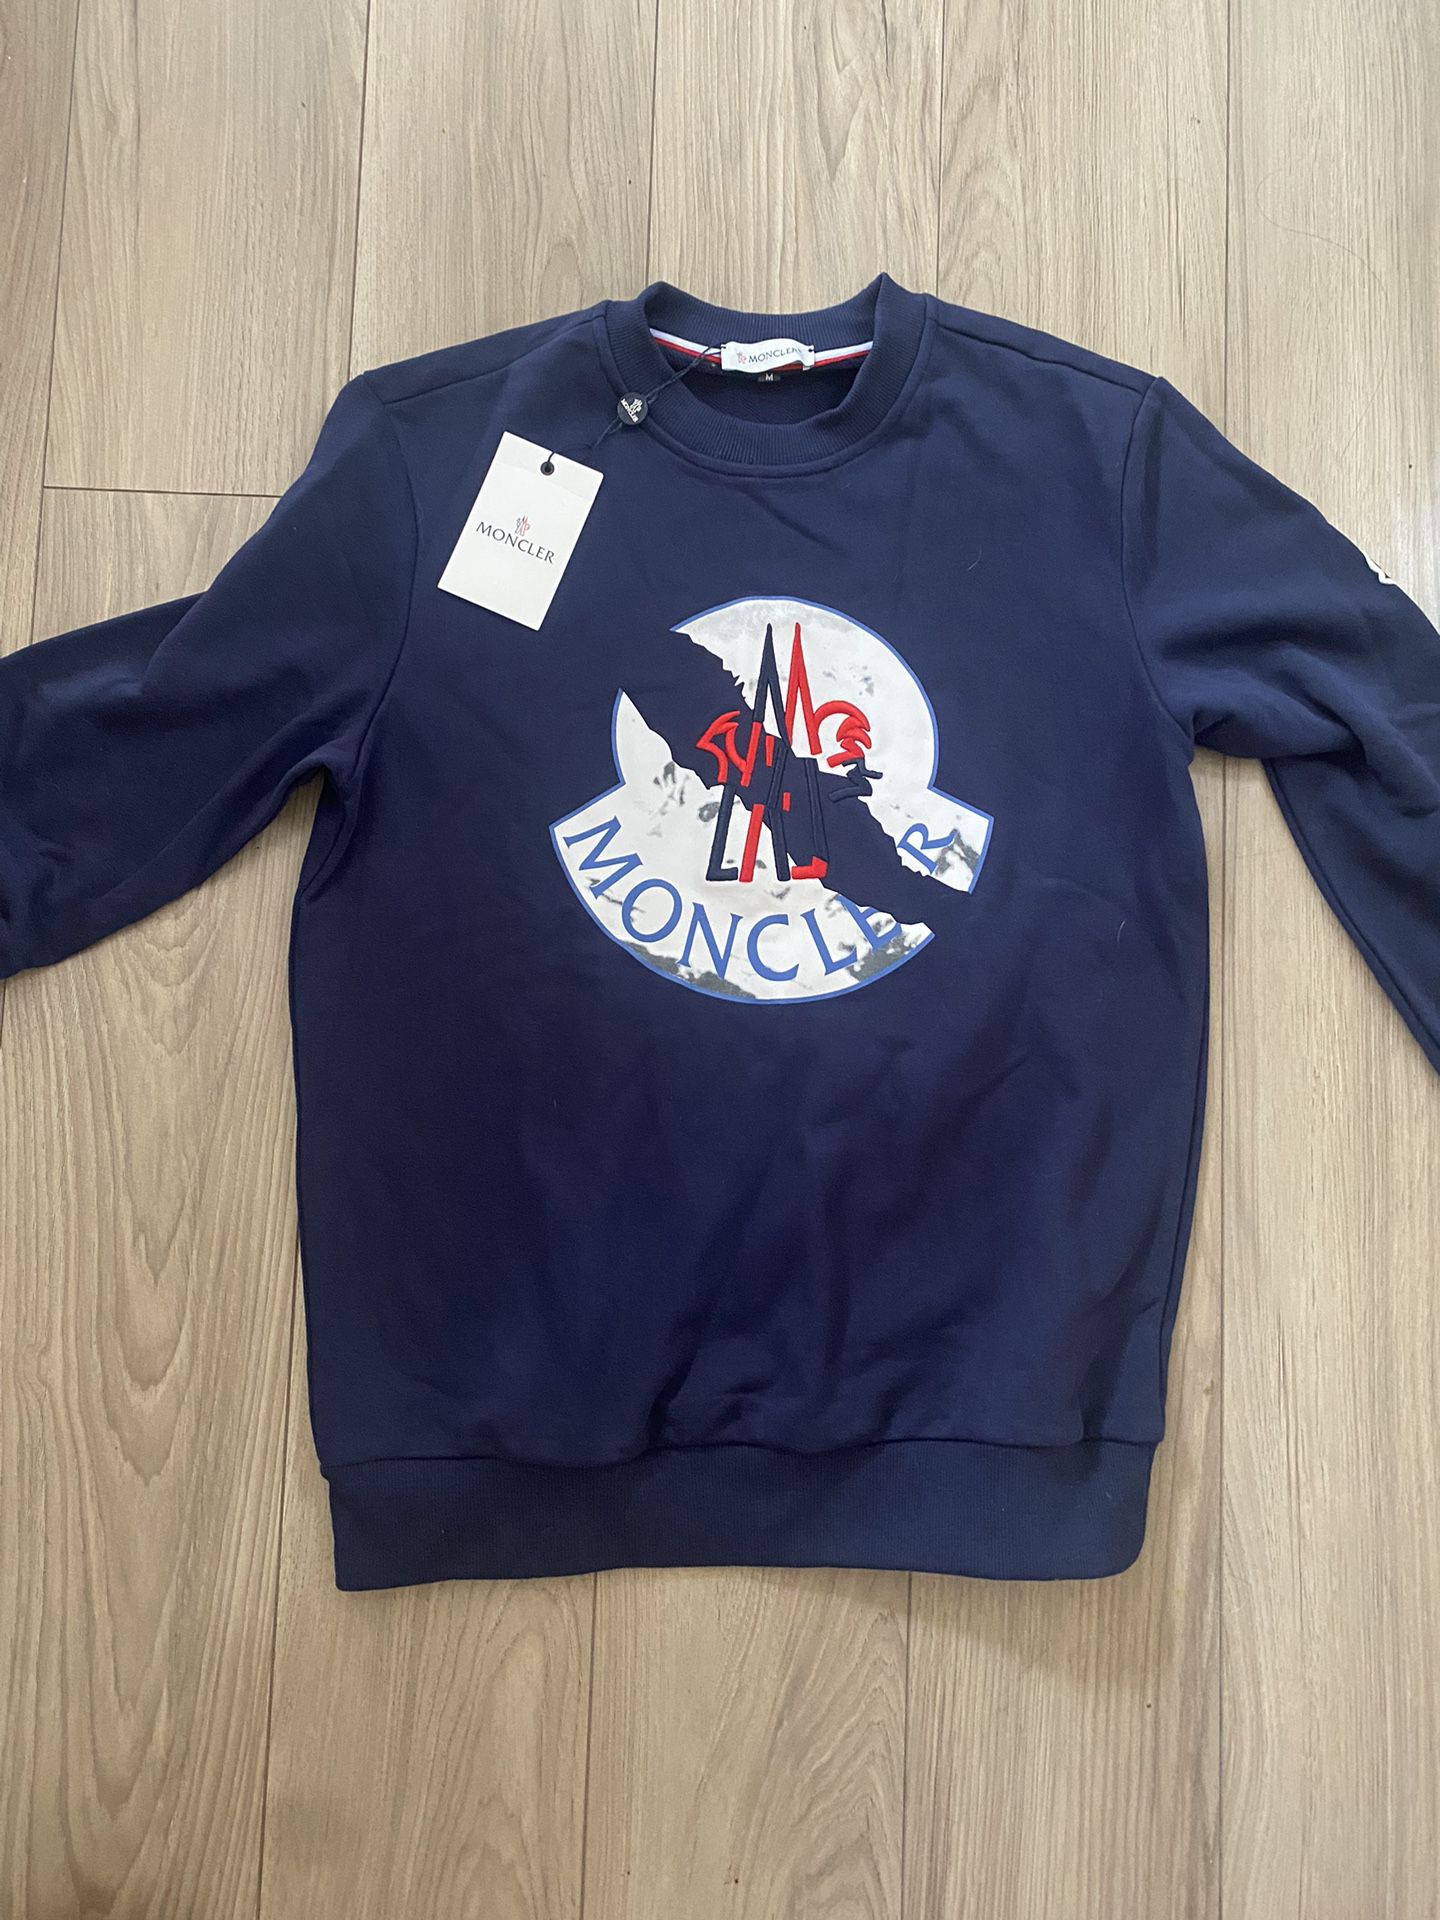 Moncler Embroidered Crewneck Sweatshirt, Size Medium, 